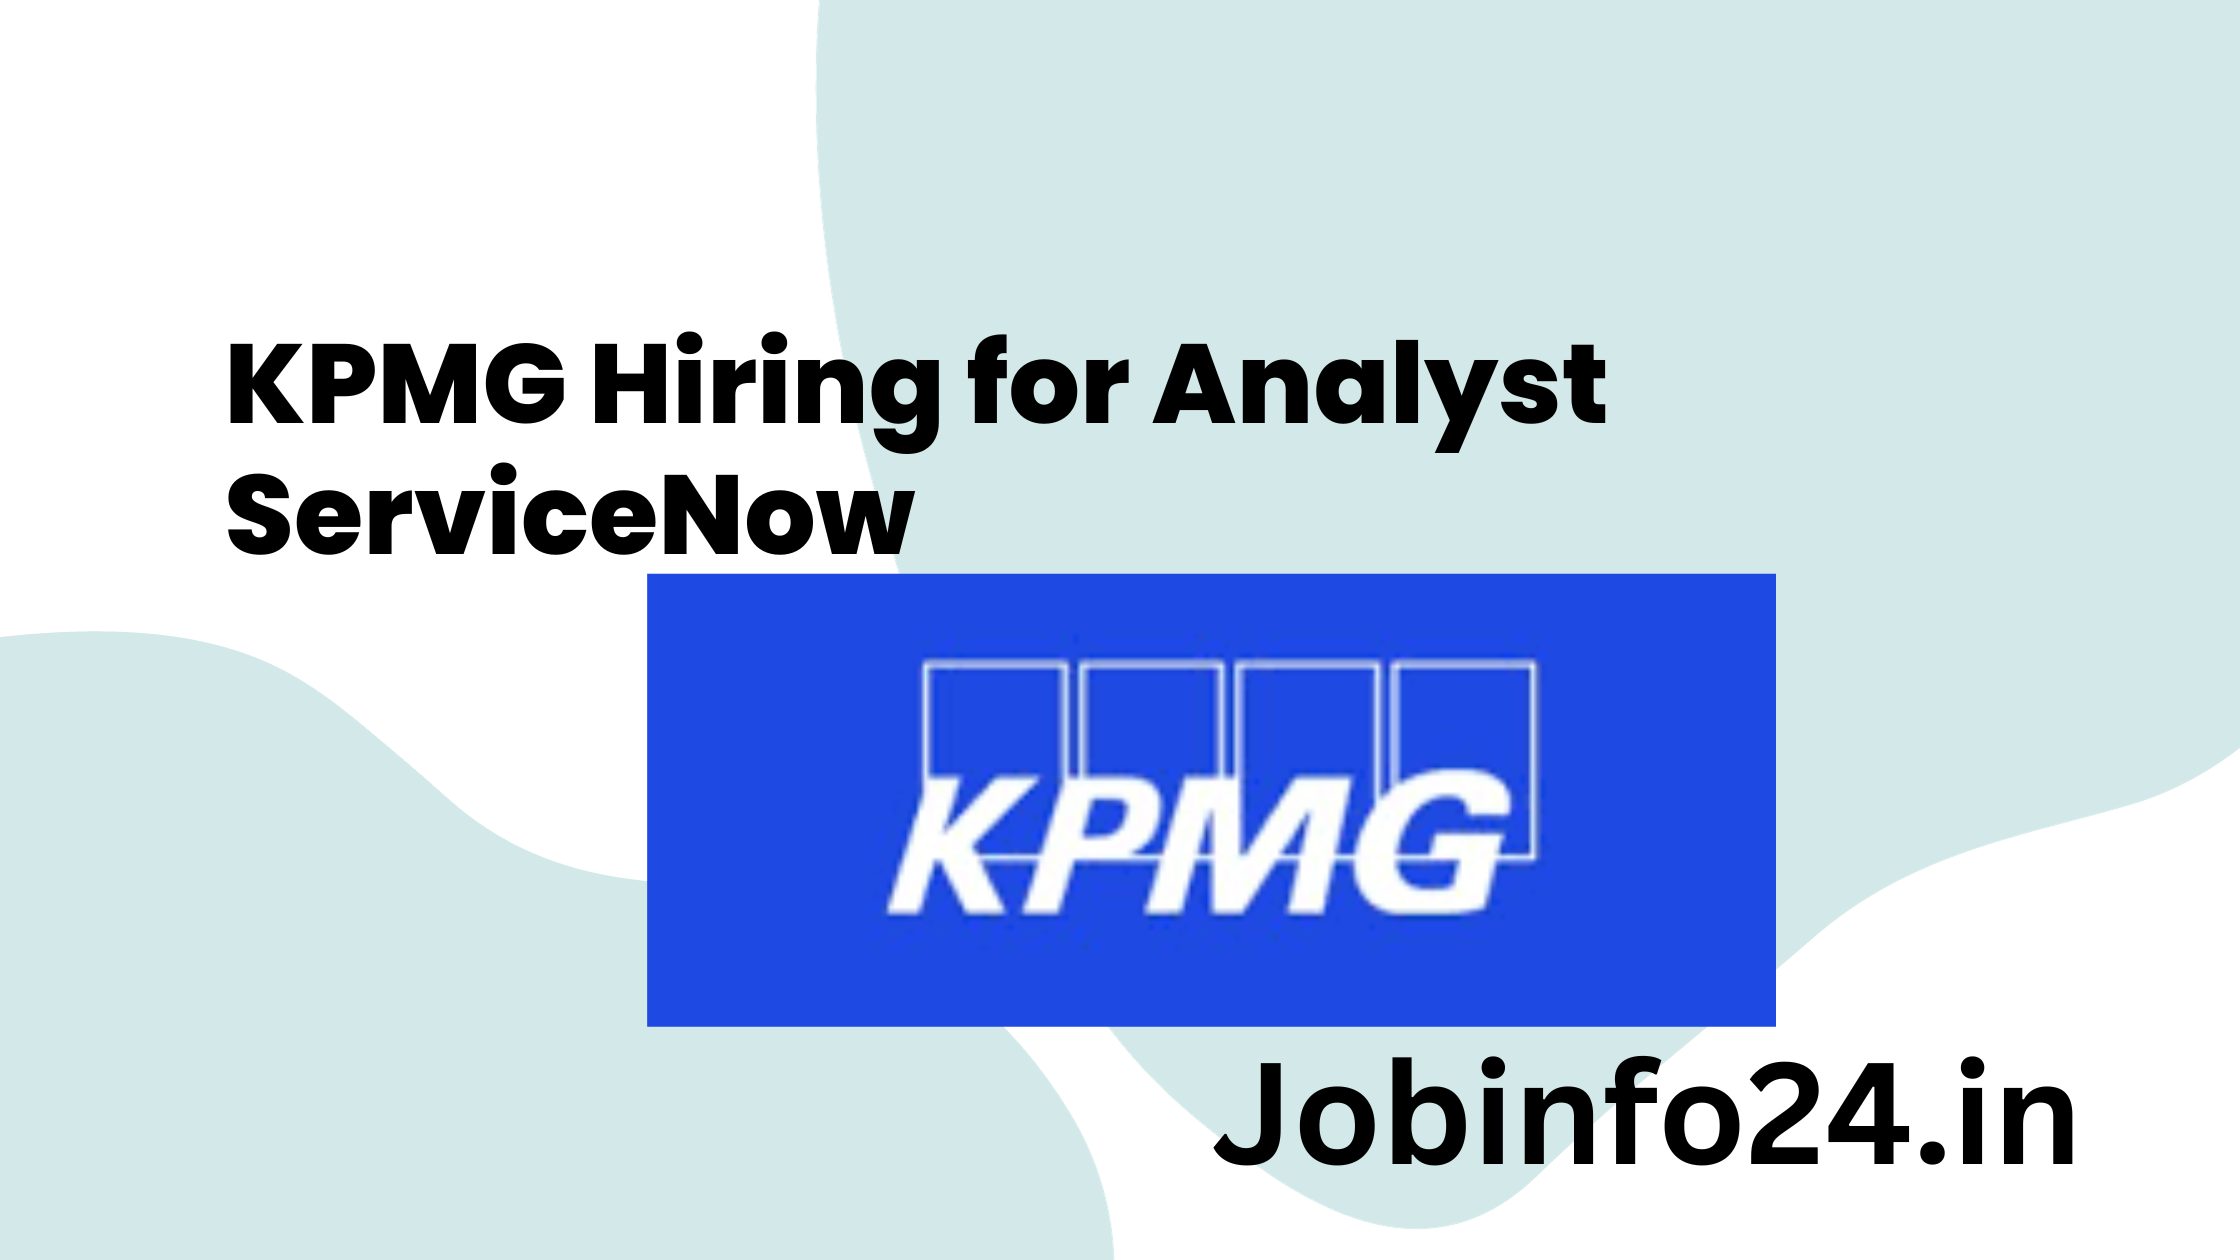 KPMG Hiring for Analyst ServiceNow